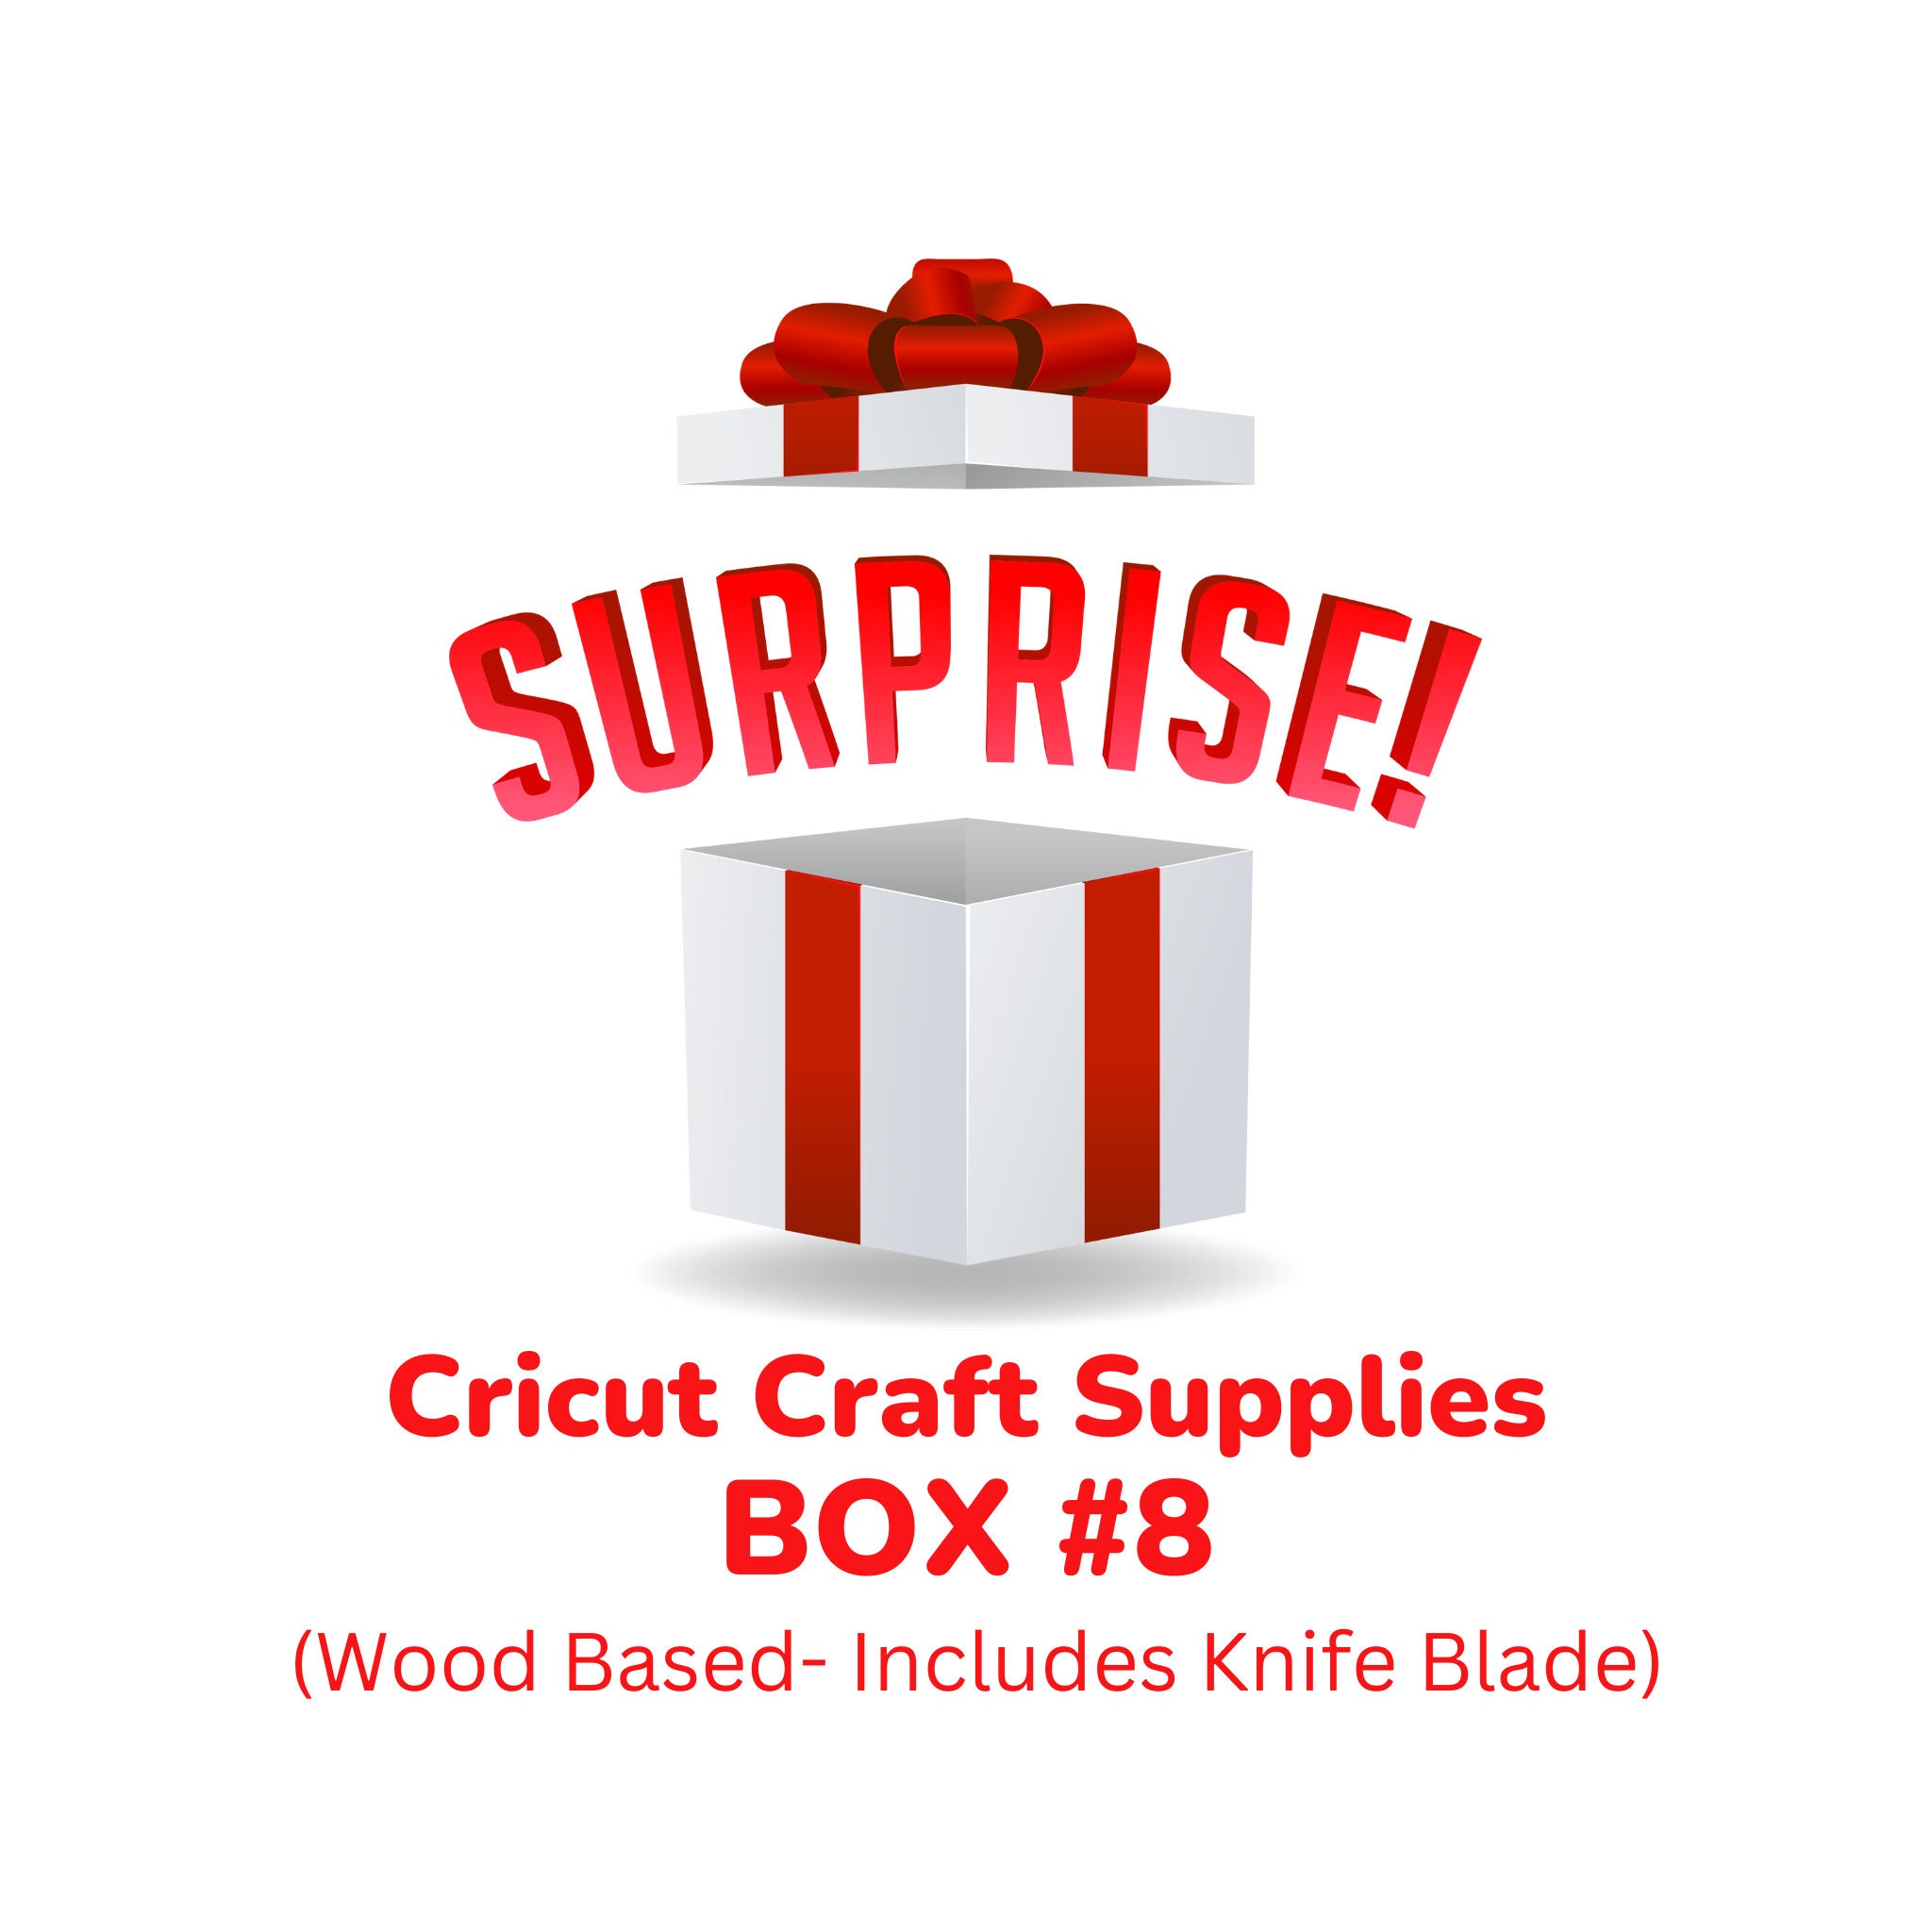  Cricut Crafting Store: Knife Blade - Help